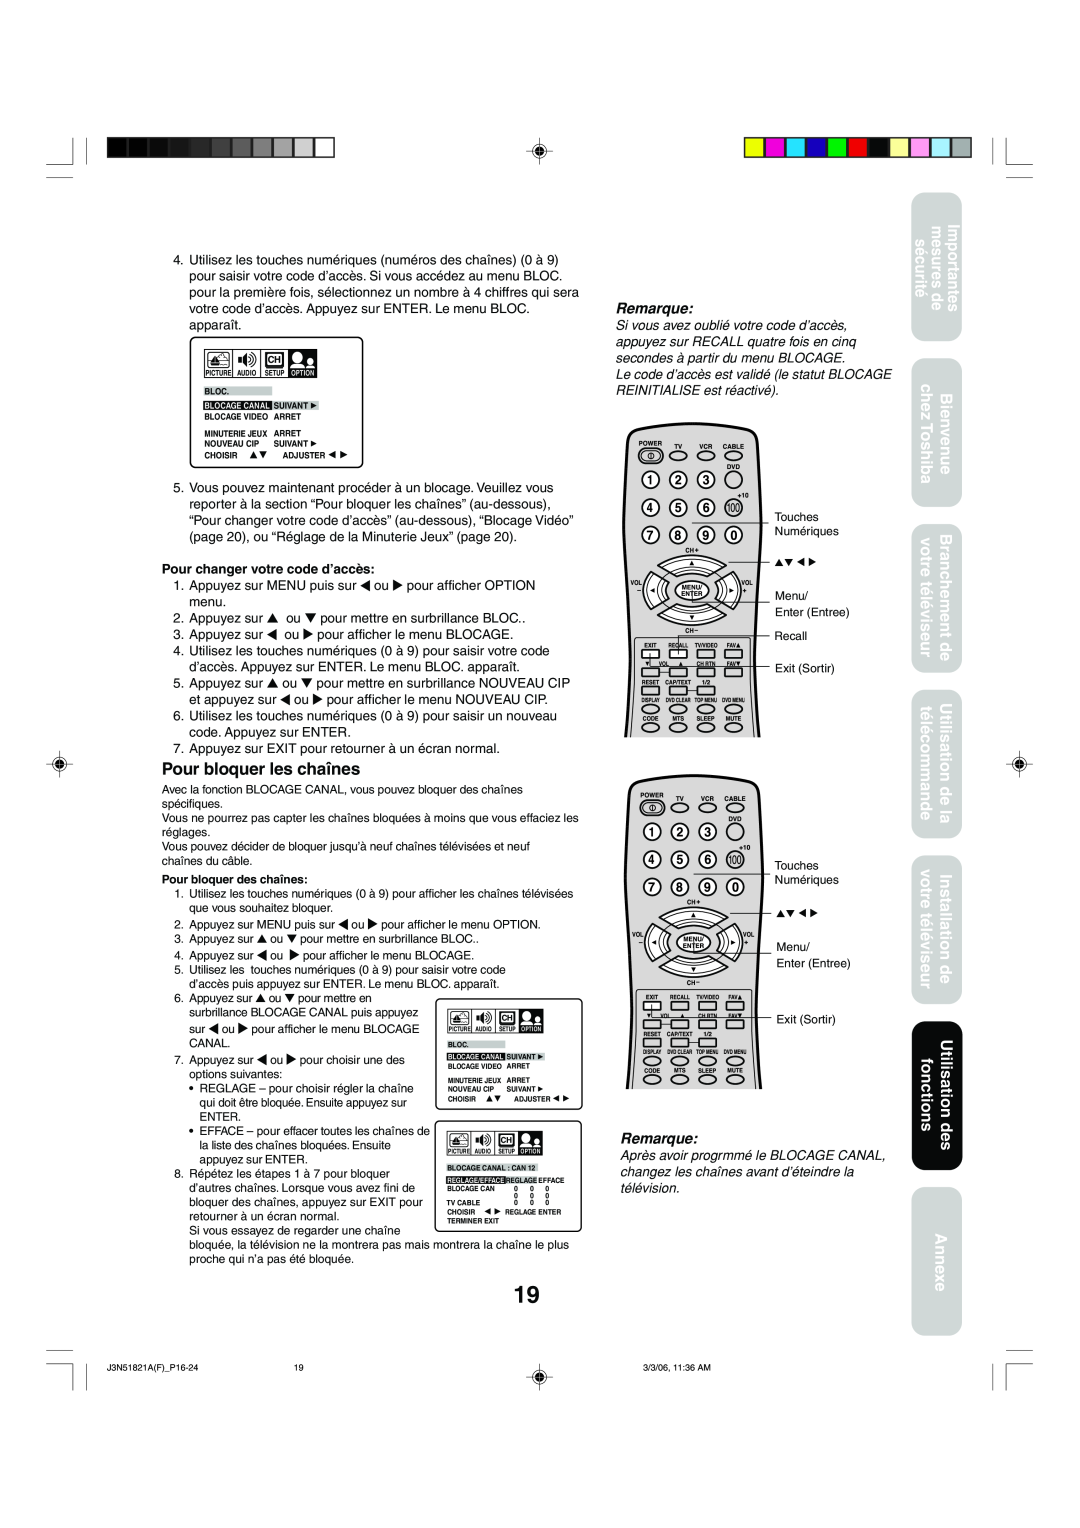 Toshiba 32A36C appendix 100VOL+, POWER 45612TV VCR 3CABLE DVD +10 